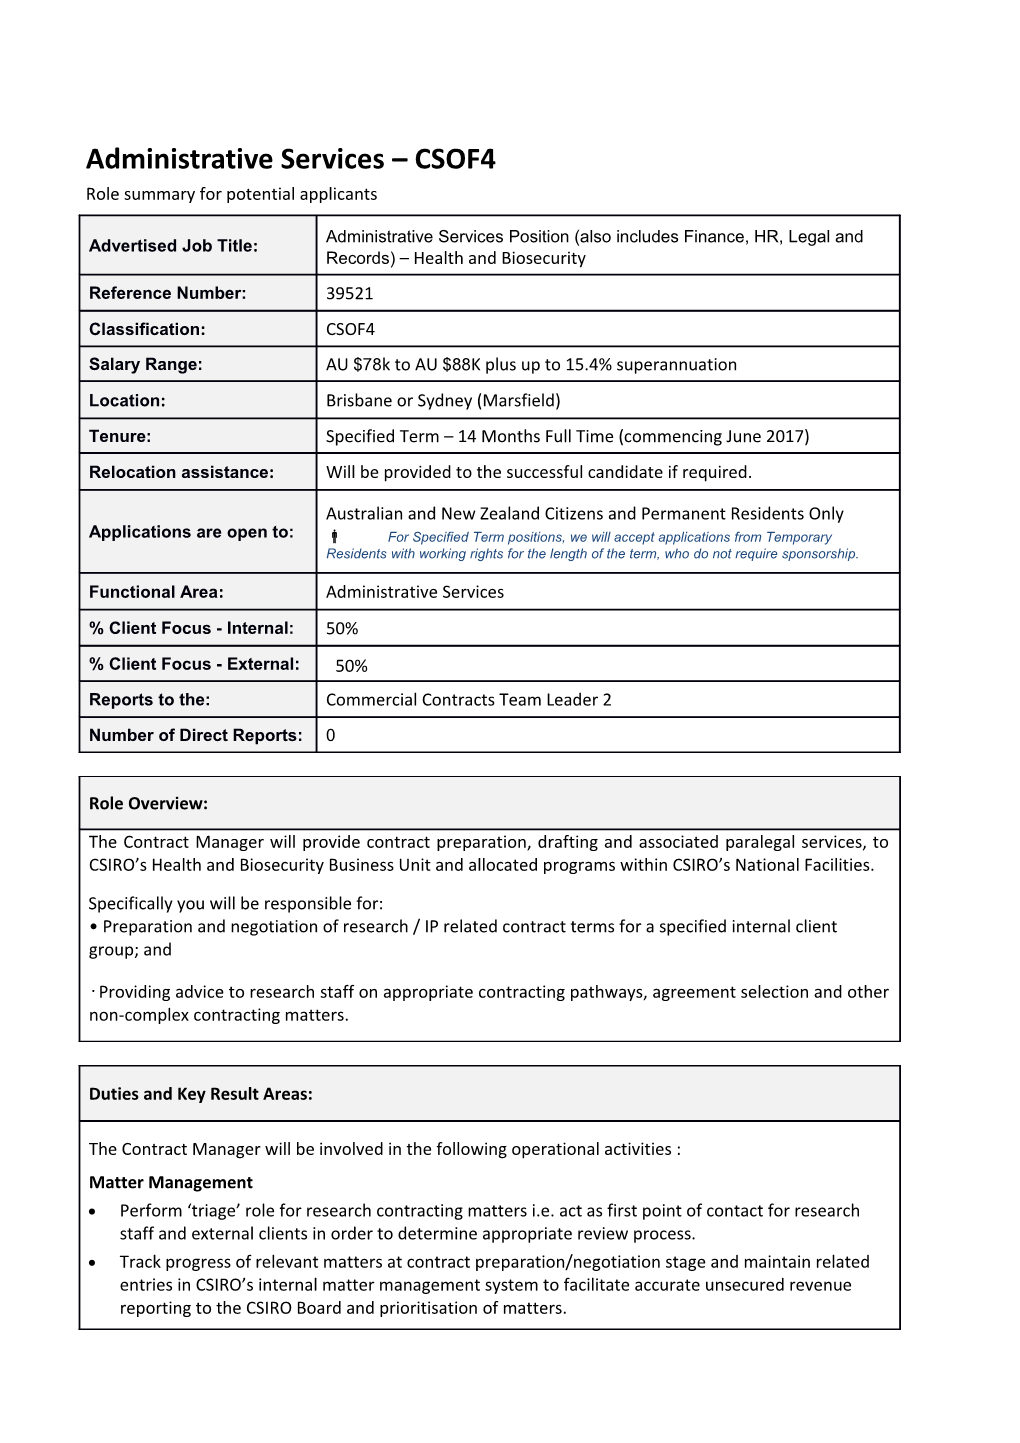 Position Details - Administrative Services - CSOF4